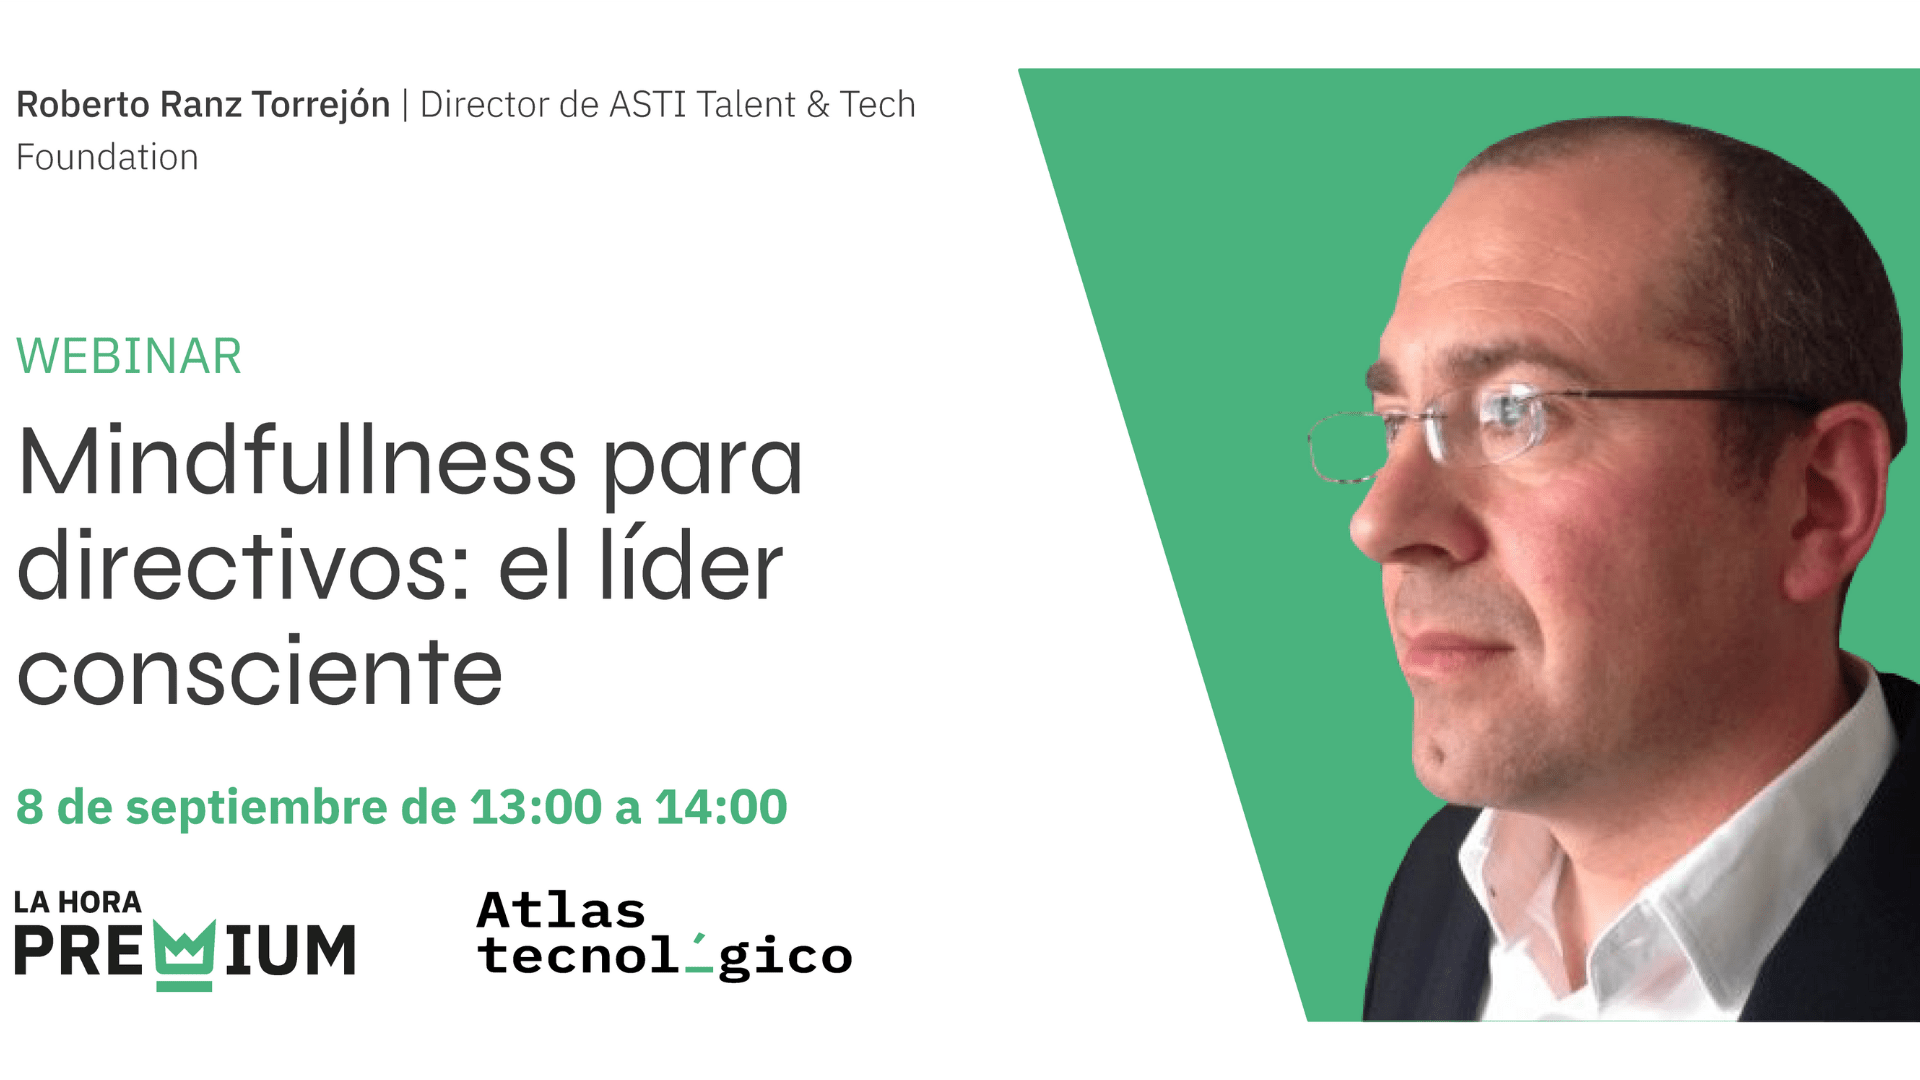 Roberto Ranz Torrejón (ASTI Talent & Tech Foundation), hablará sobre Mindfulness para directivos en La Hora Premium